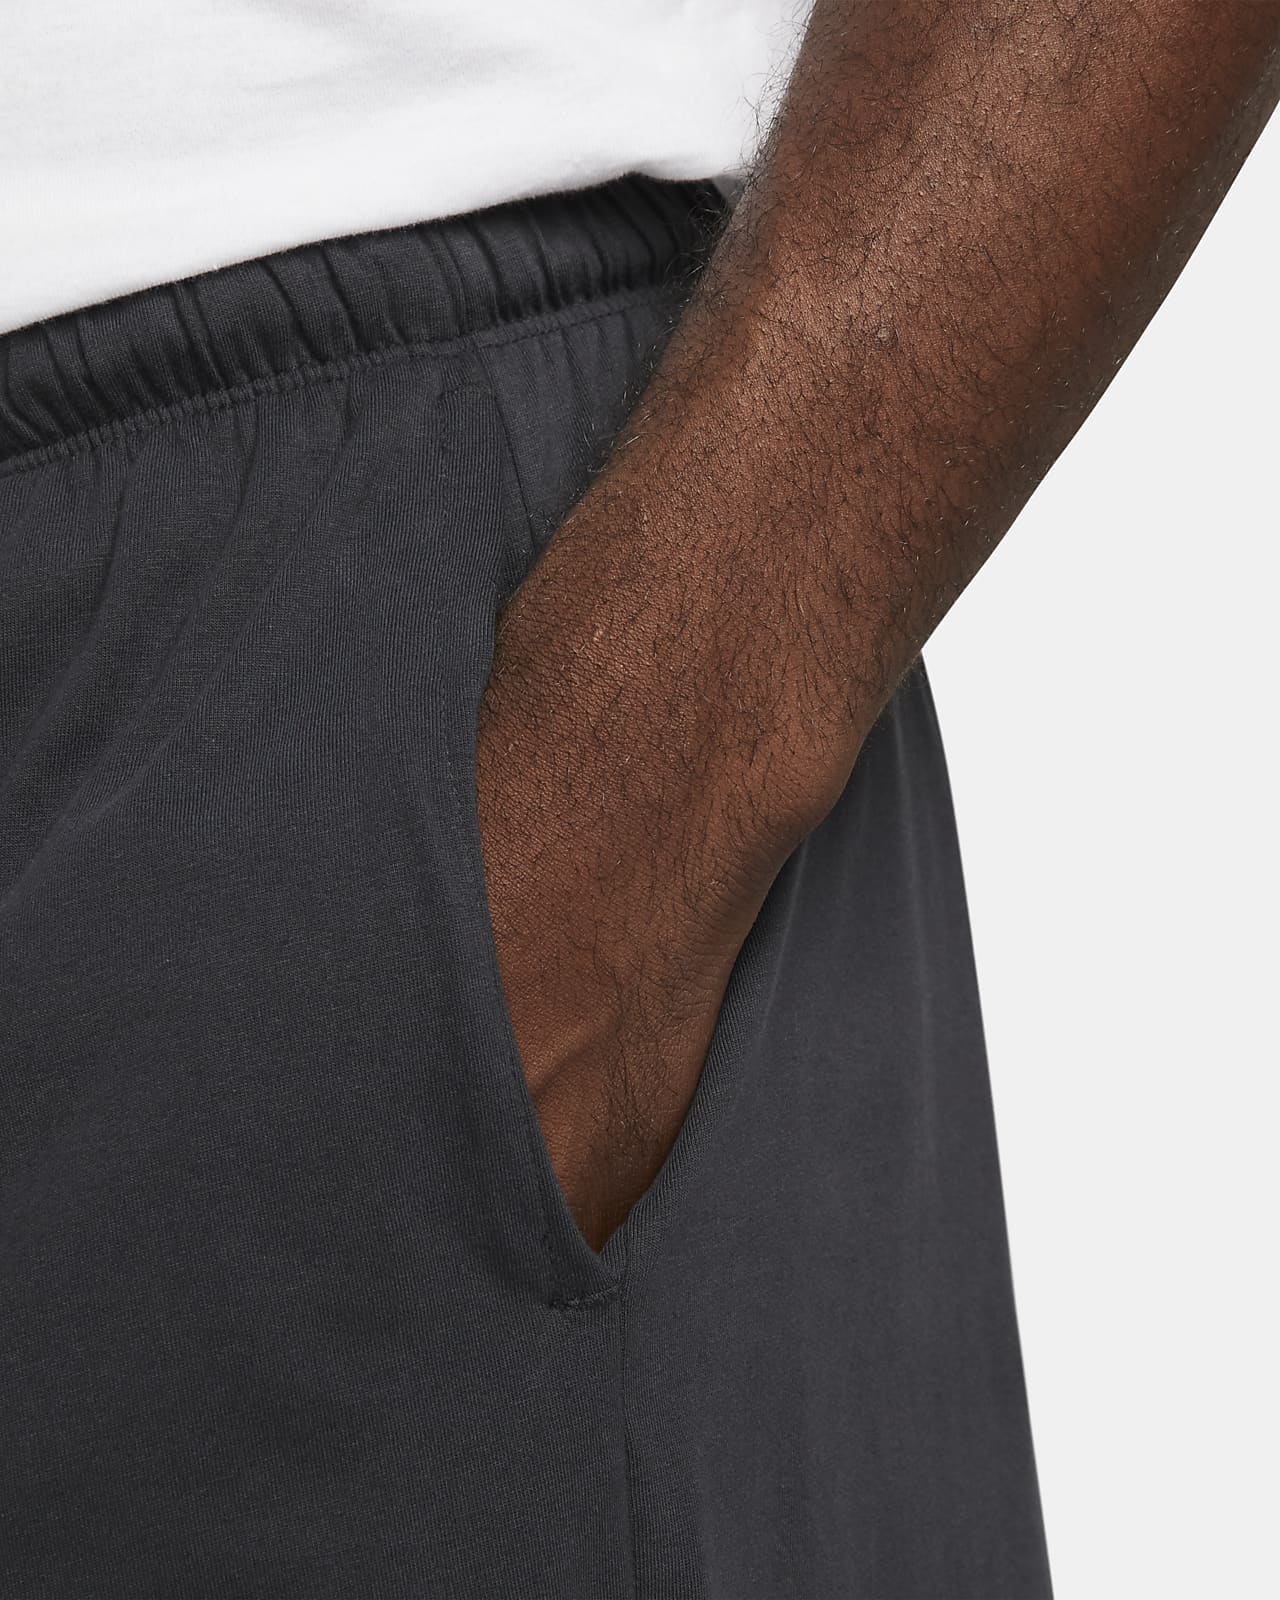 Nike Men's Premium 6 Basketball Shorts.